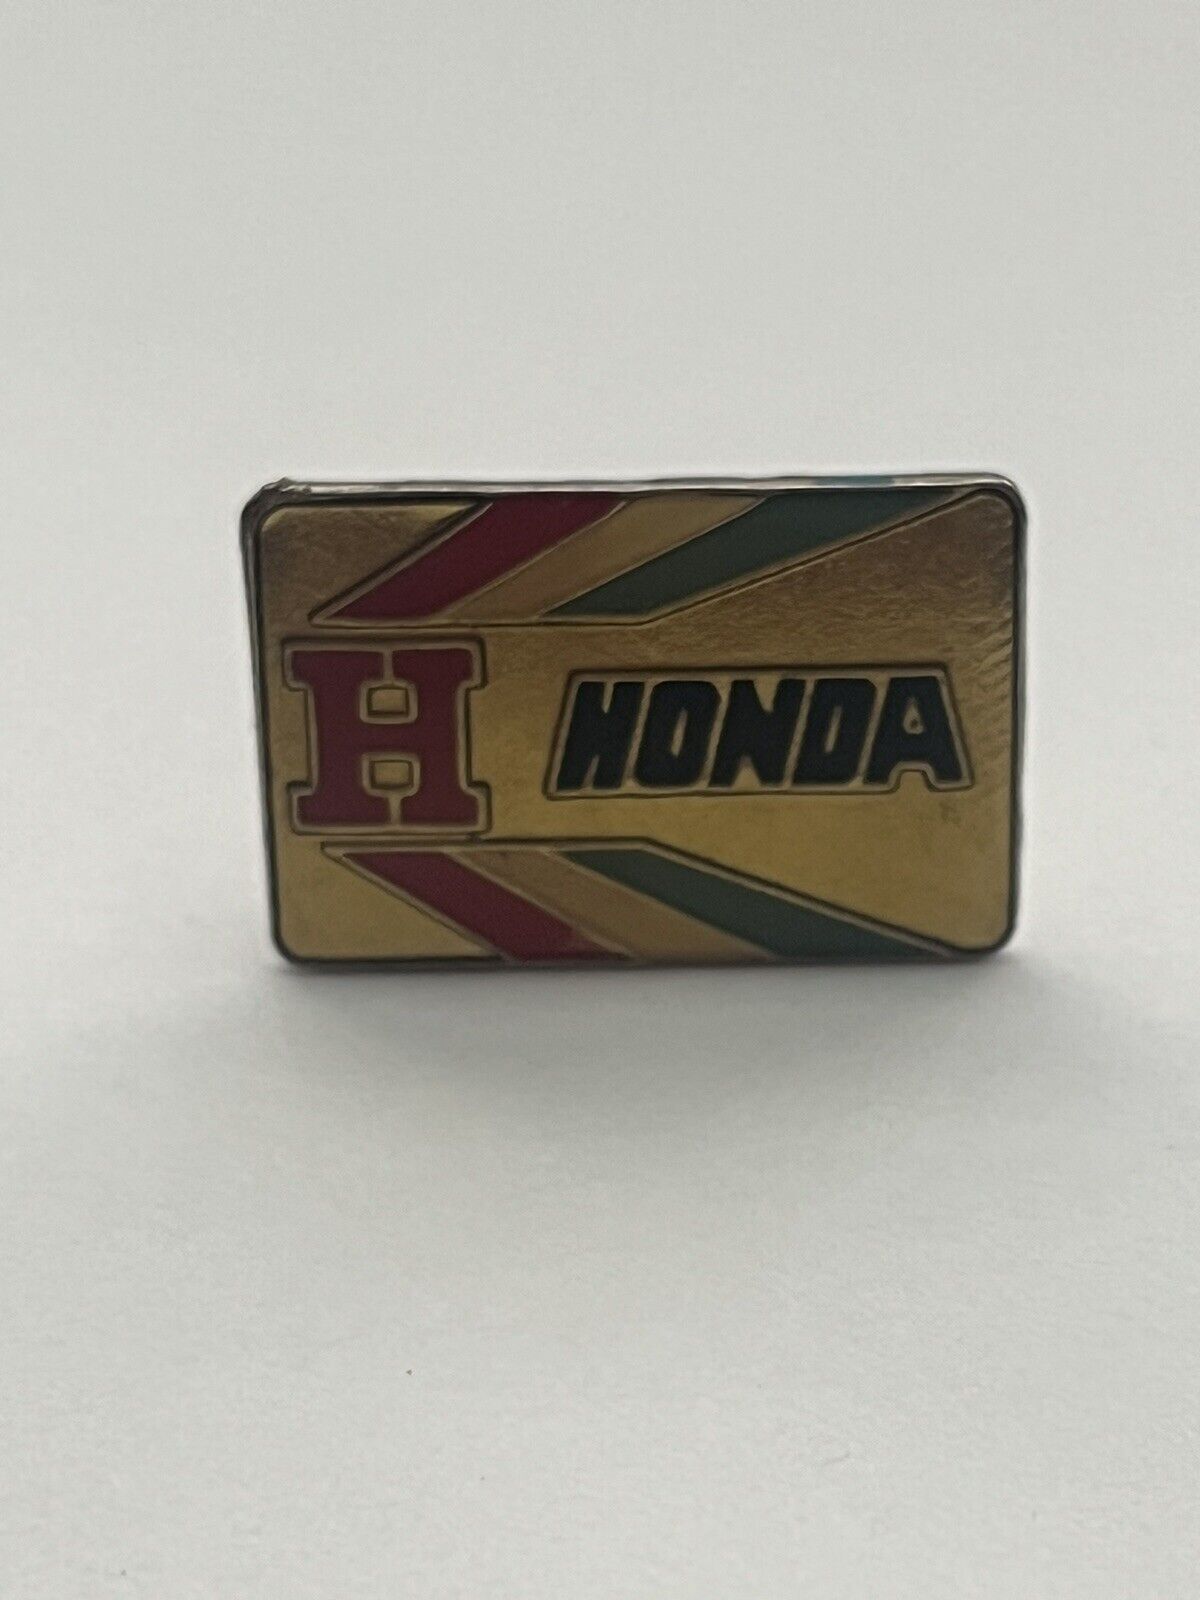 Rare Vintage Honda Brand Pin Enamel Lapel Motorcycle Automotive Car Racing Clean